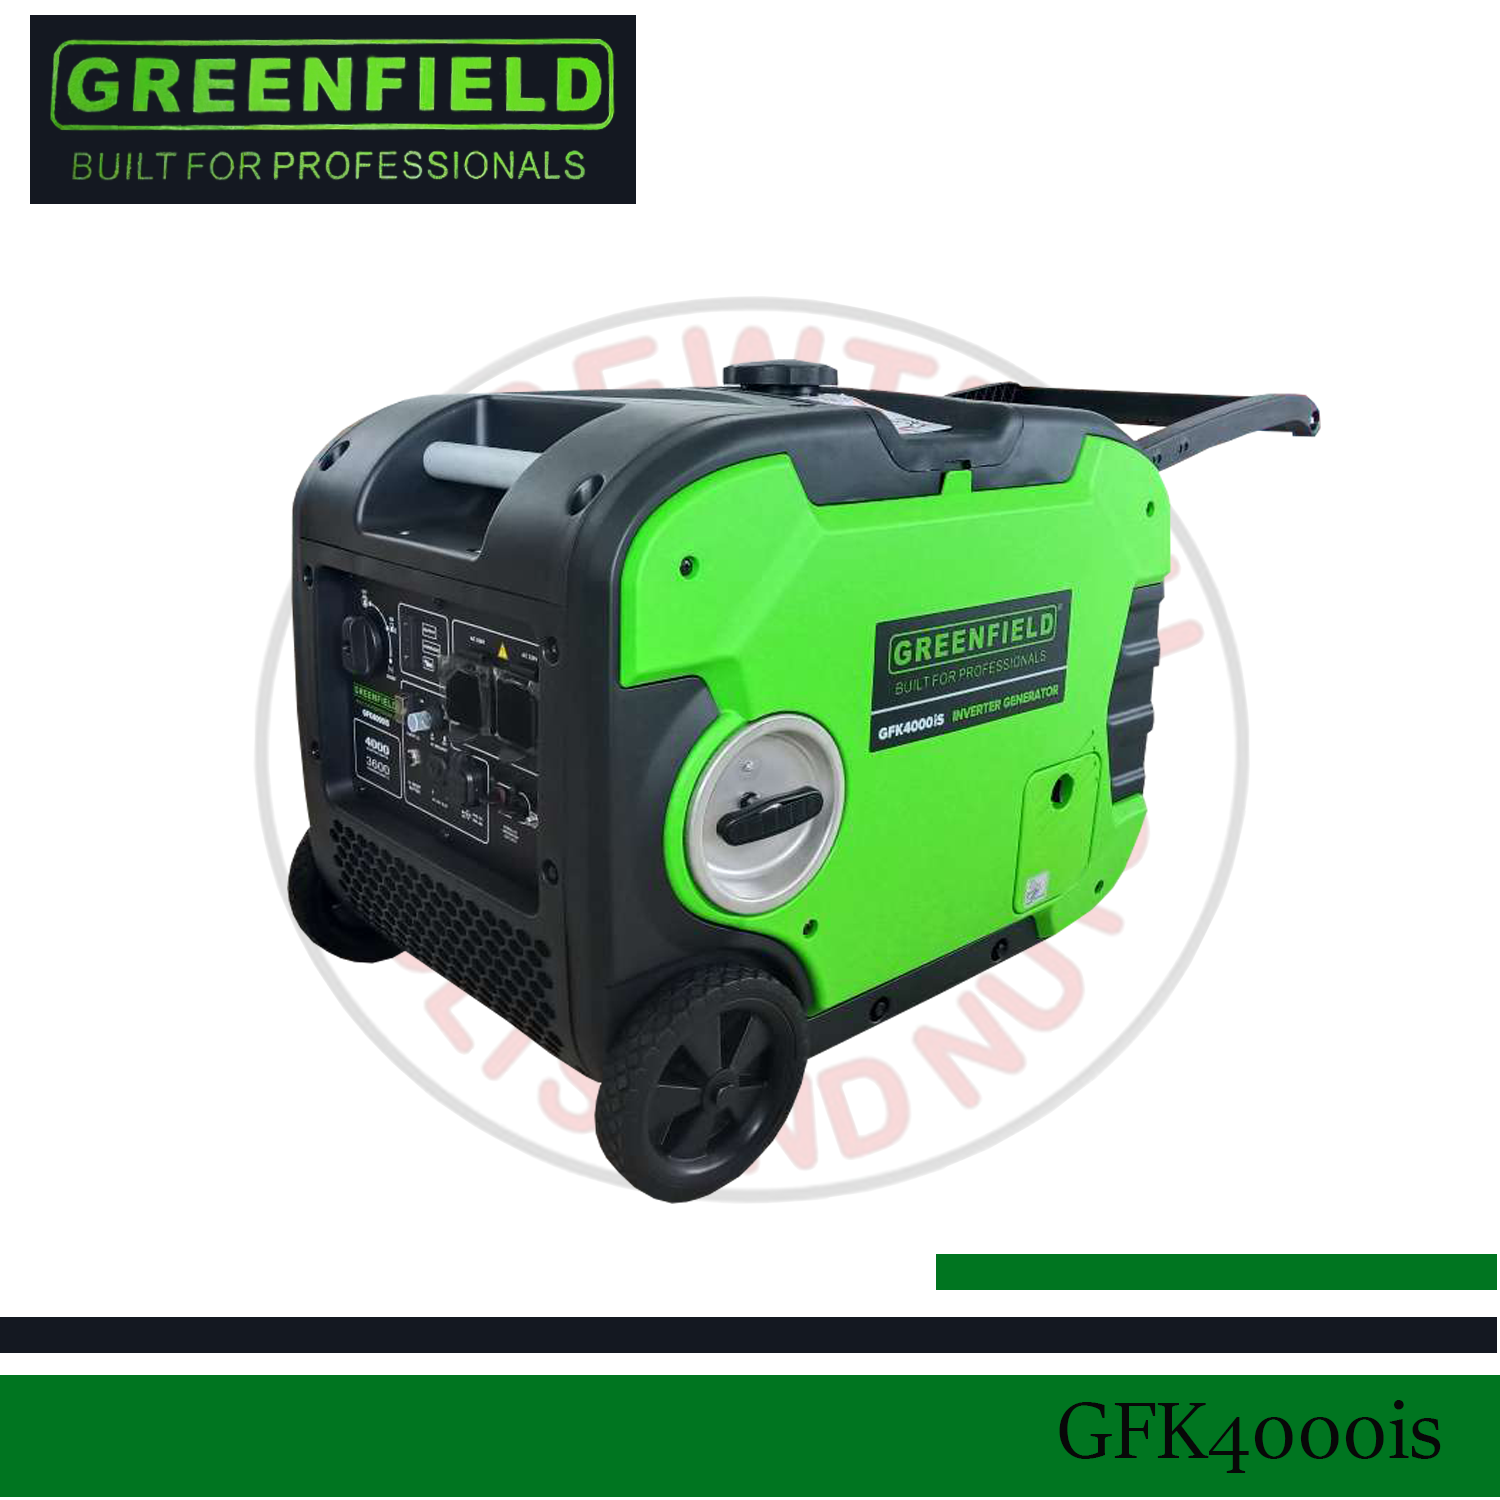 Bathroom salad iron Greenfield Inverter Generator 4000w Gasoline GFK4000is | Lazada PH